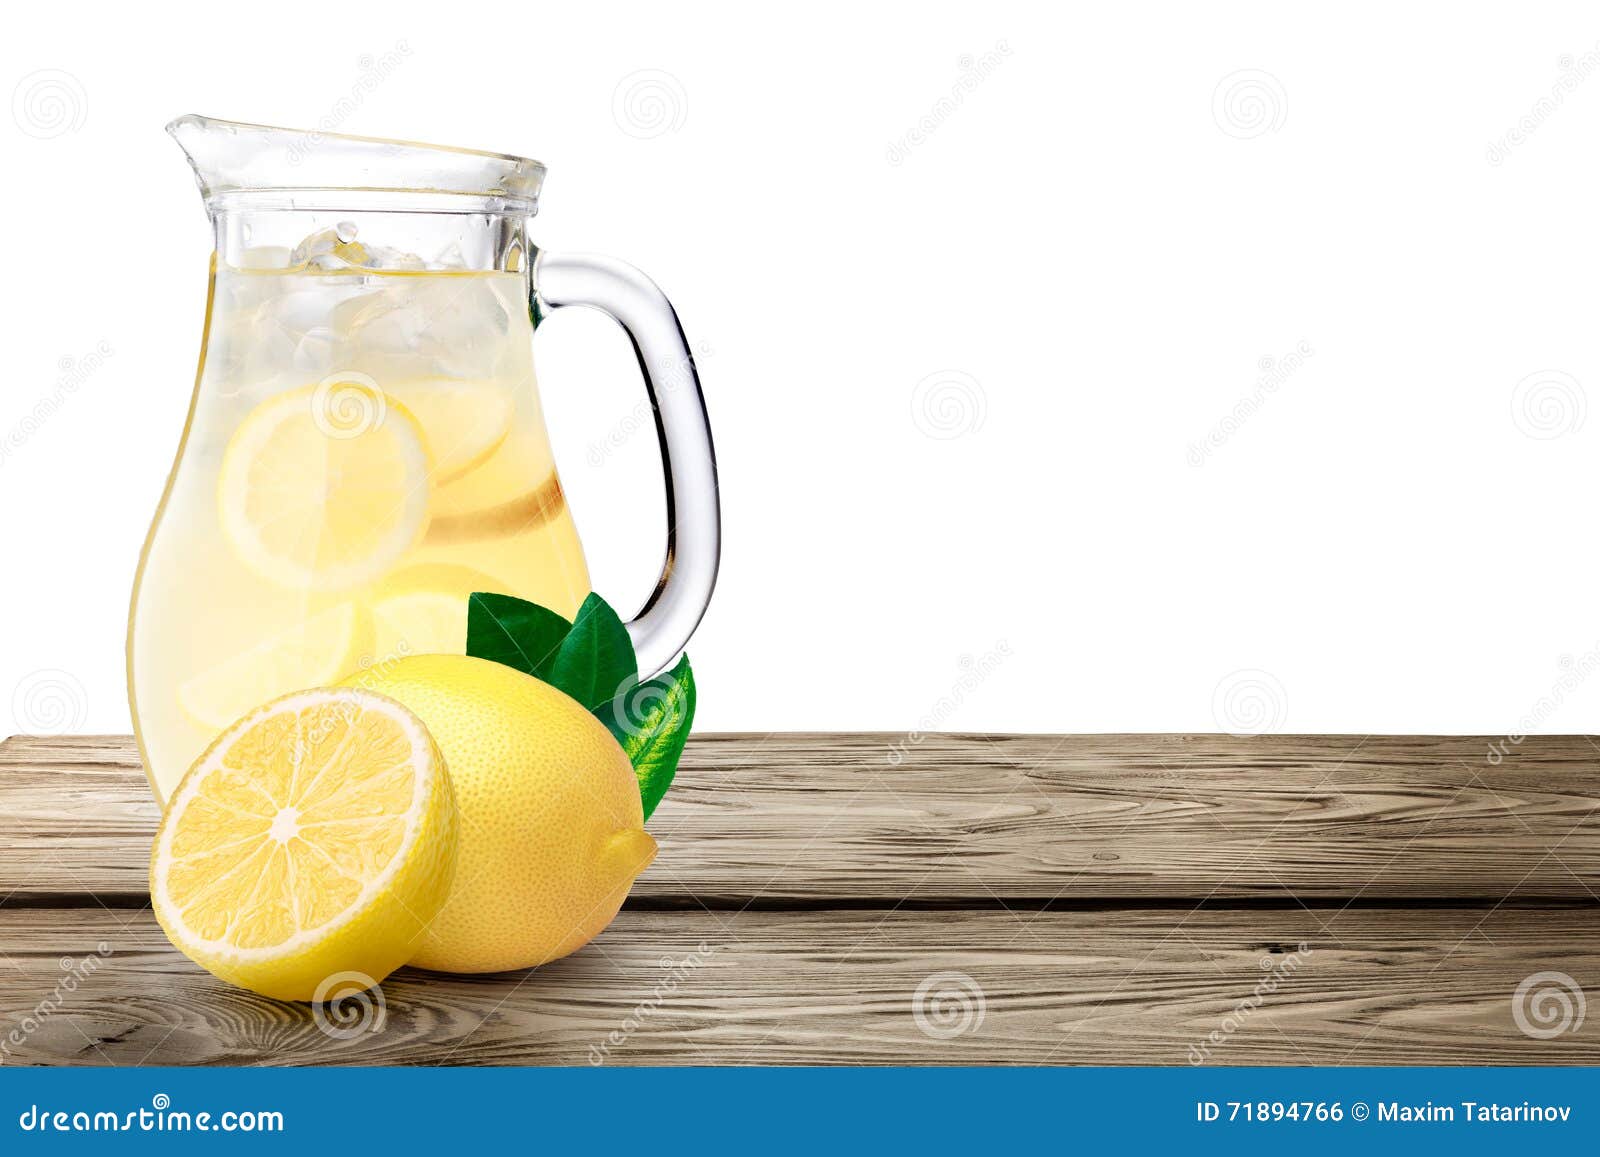 lemonade pitcher on wooden table